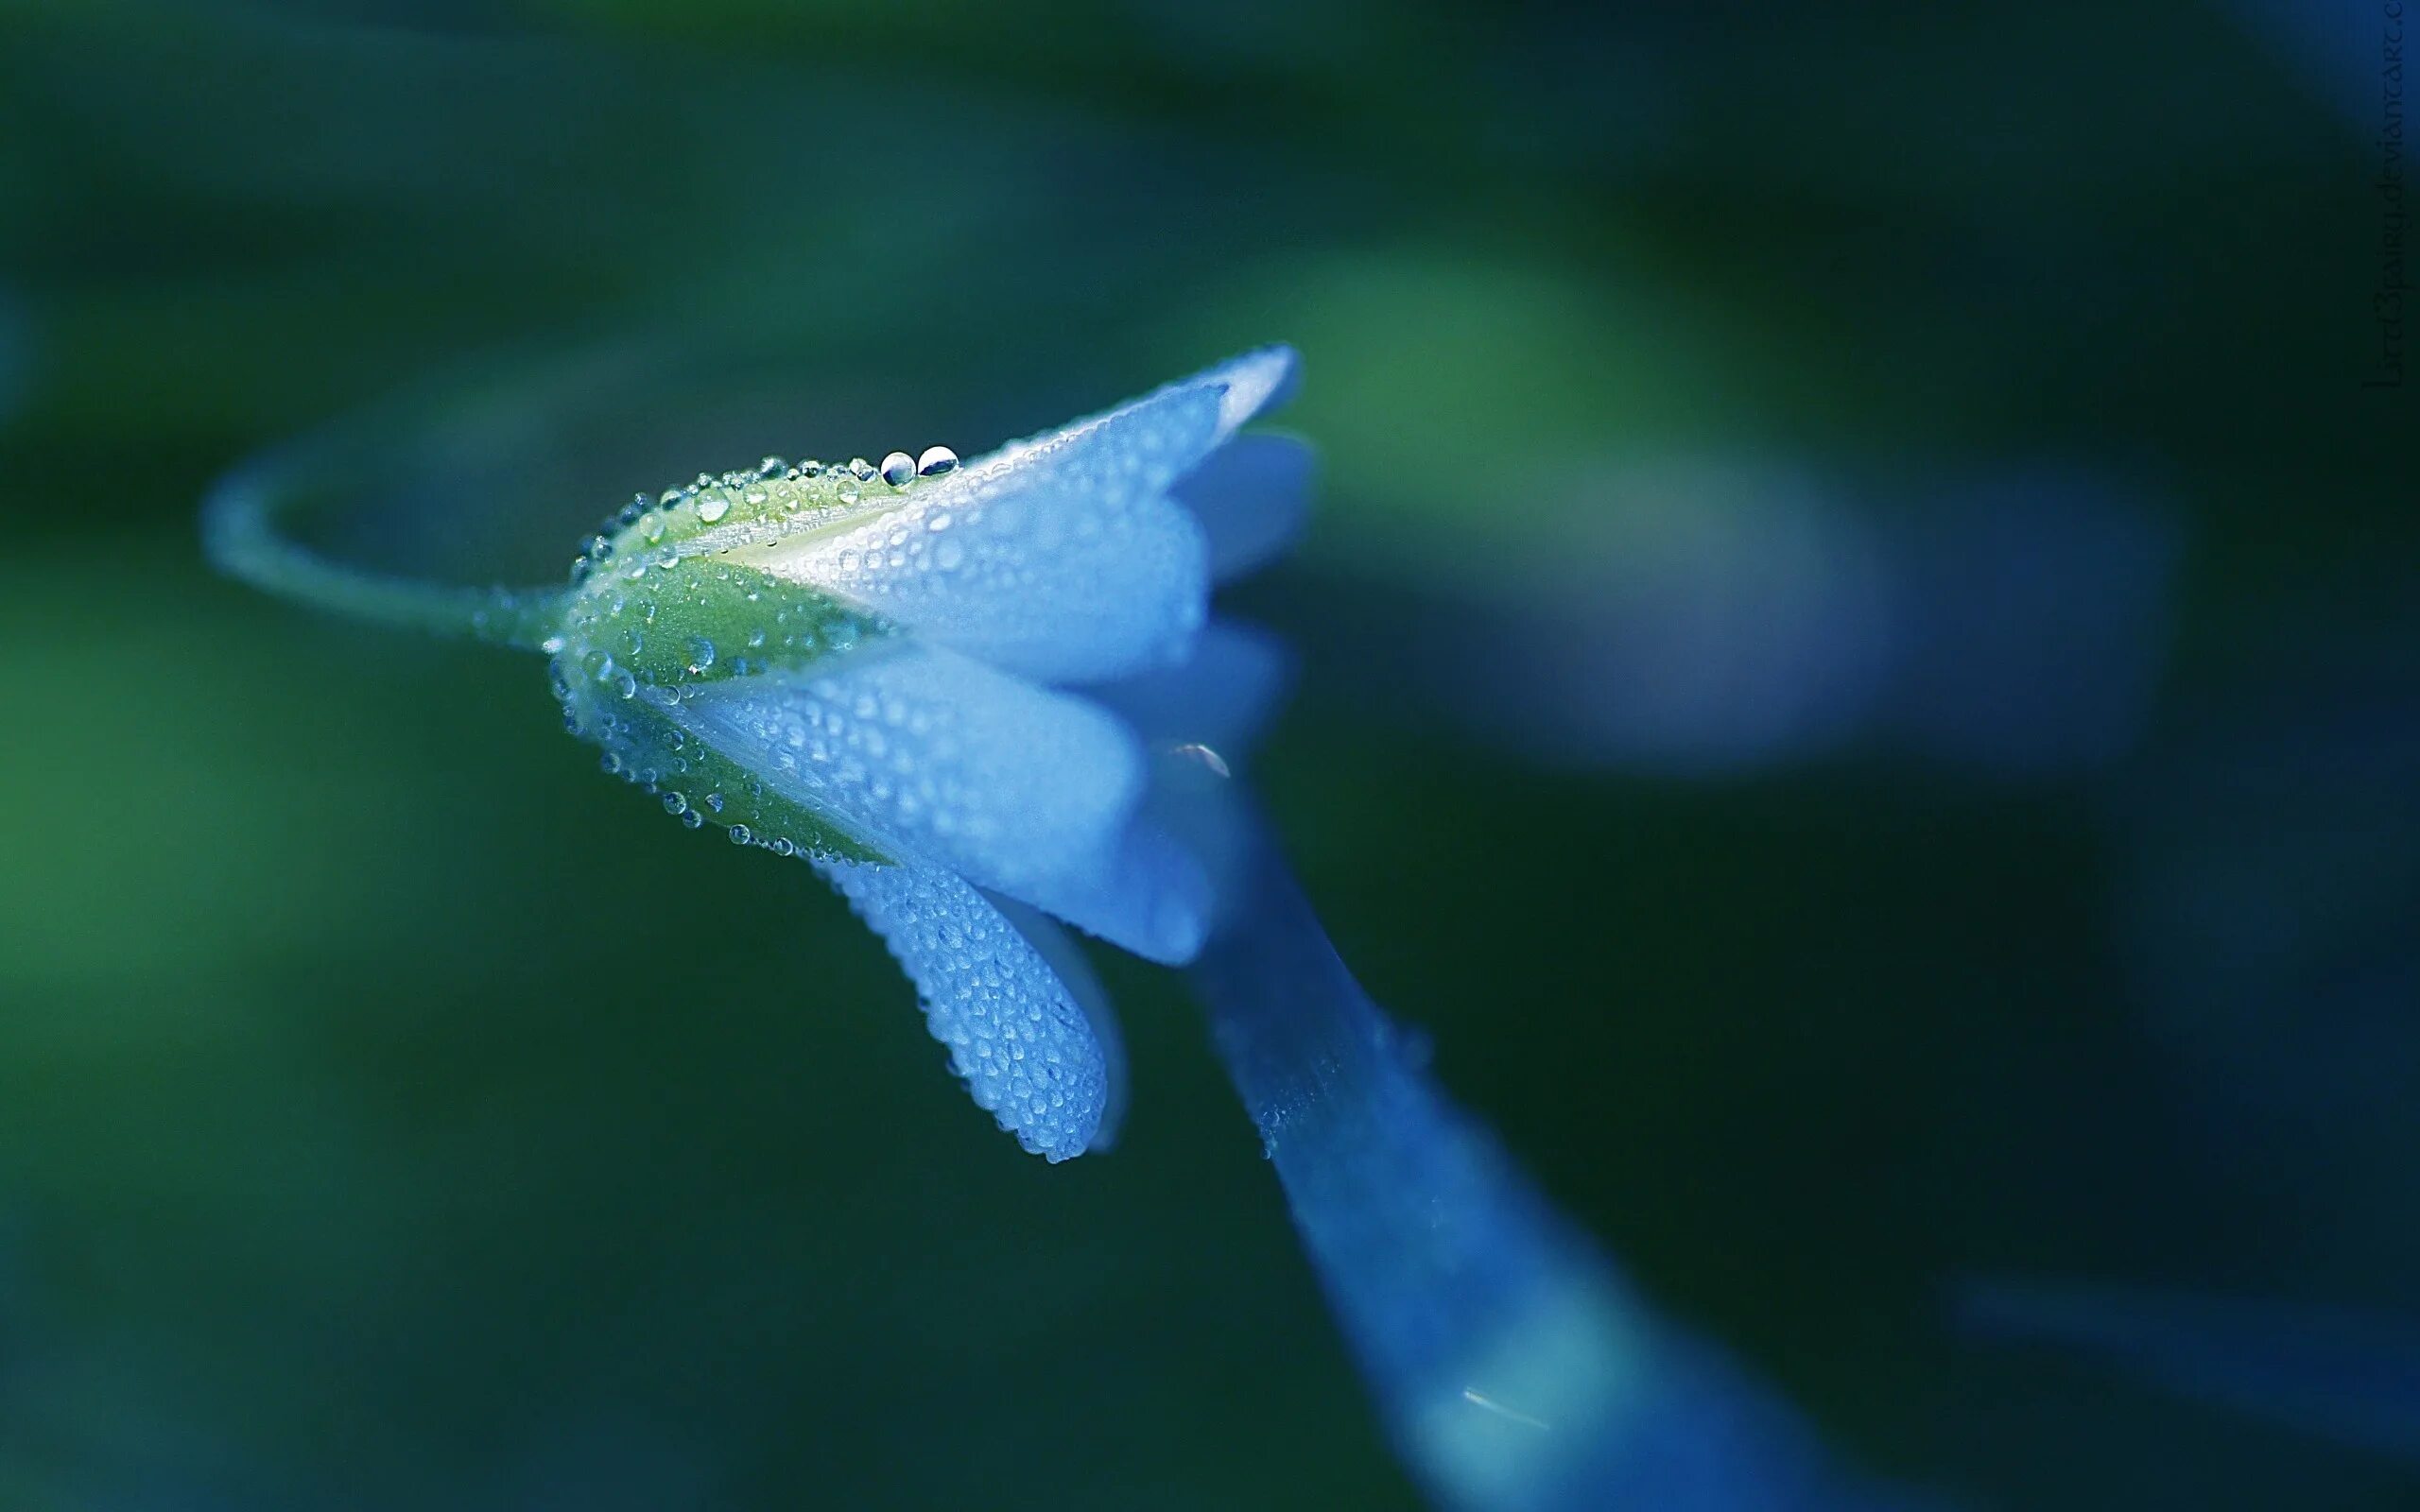 Drop flowers. Цветы Макросъемка. Голубые цветы. Макросъемка природа. Цветы макро голубой.